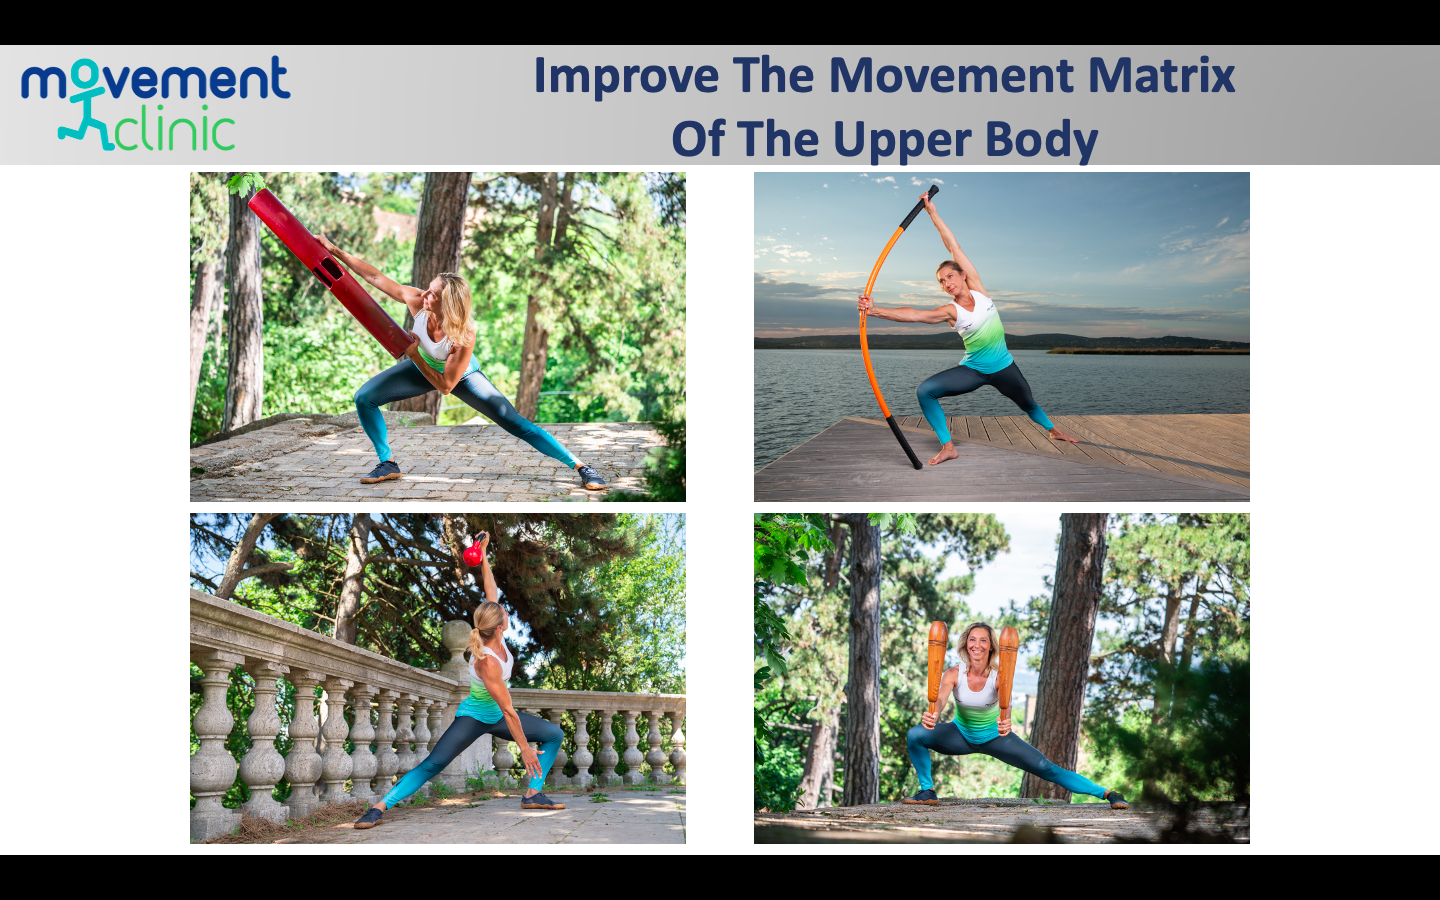 Improve the movement matrix of the upper body